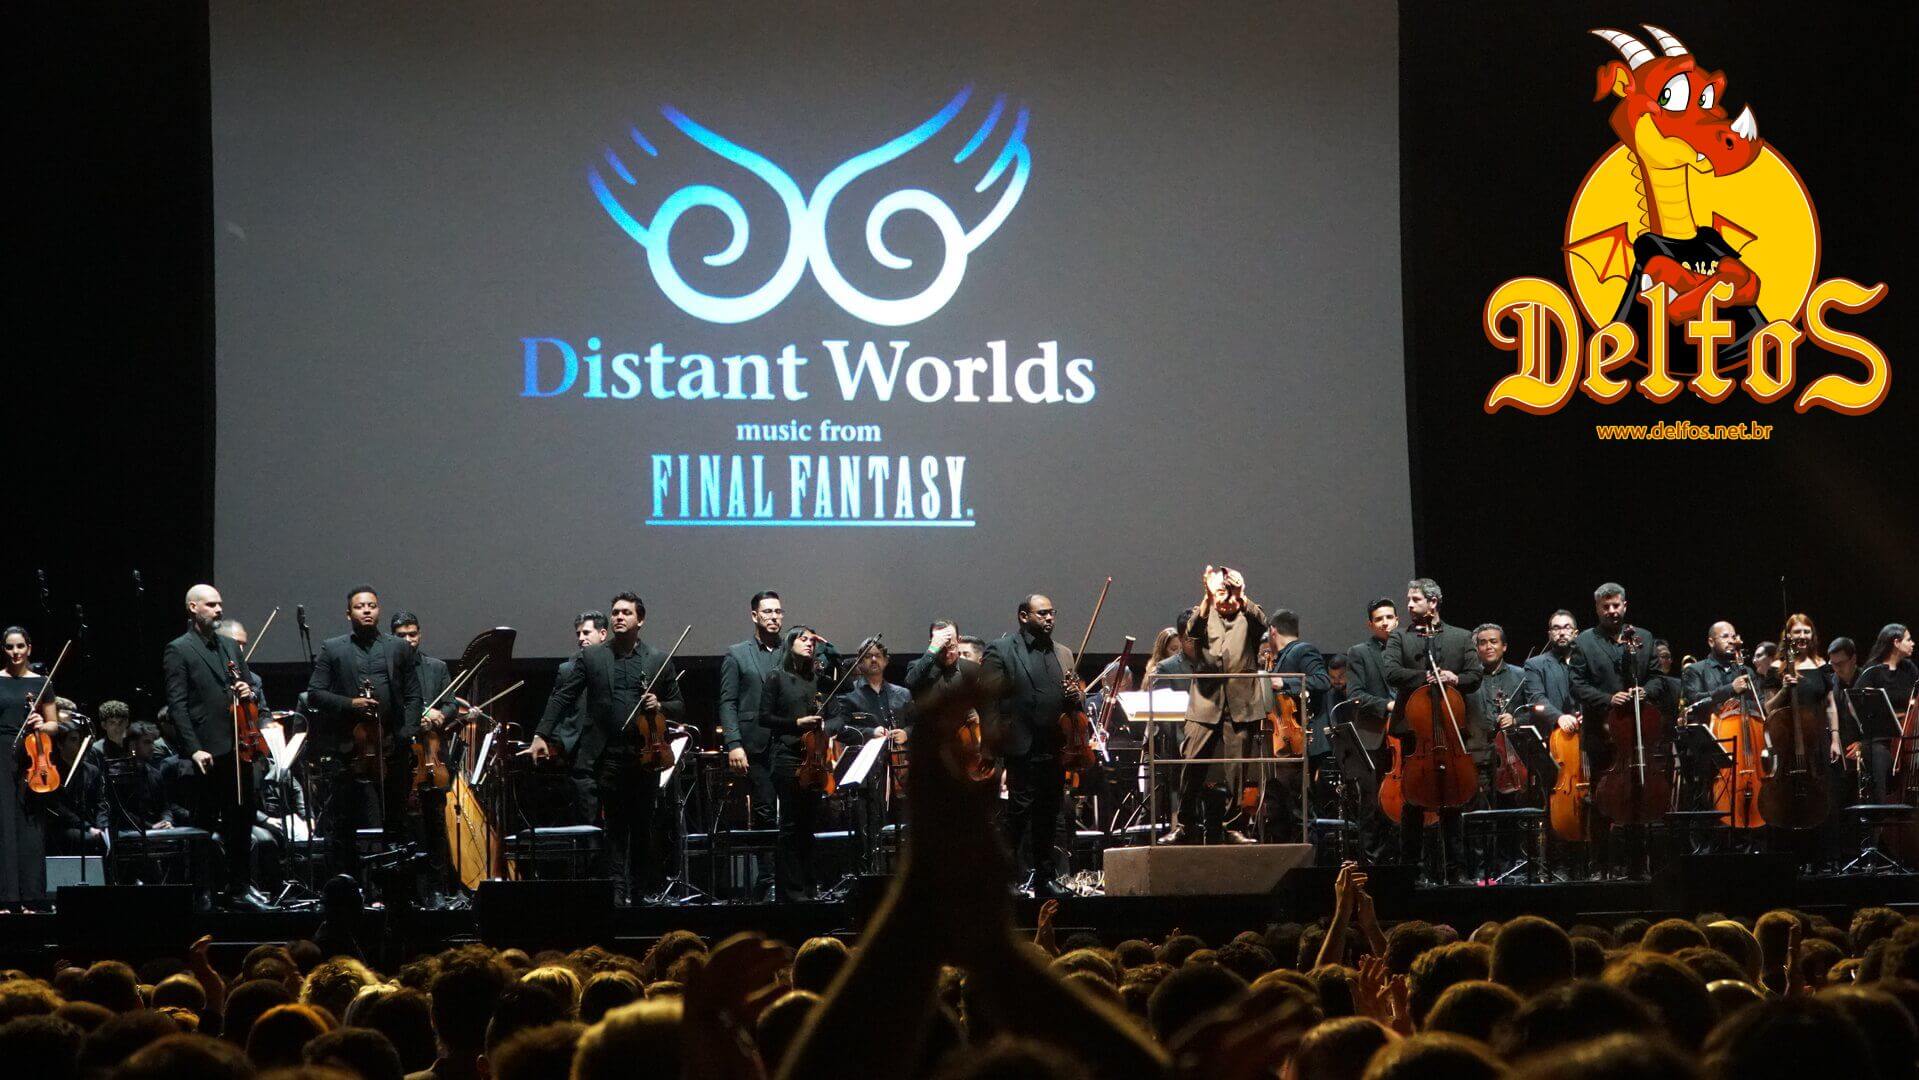 Distant Worlds, Final Fantasy, Arnie Roth, Orquestra Sinfônica Villa Lobos, Delfos, Square Enix